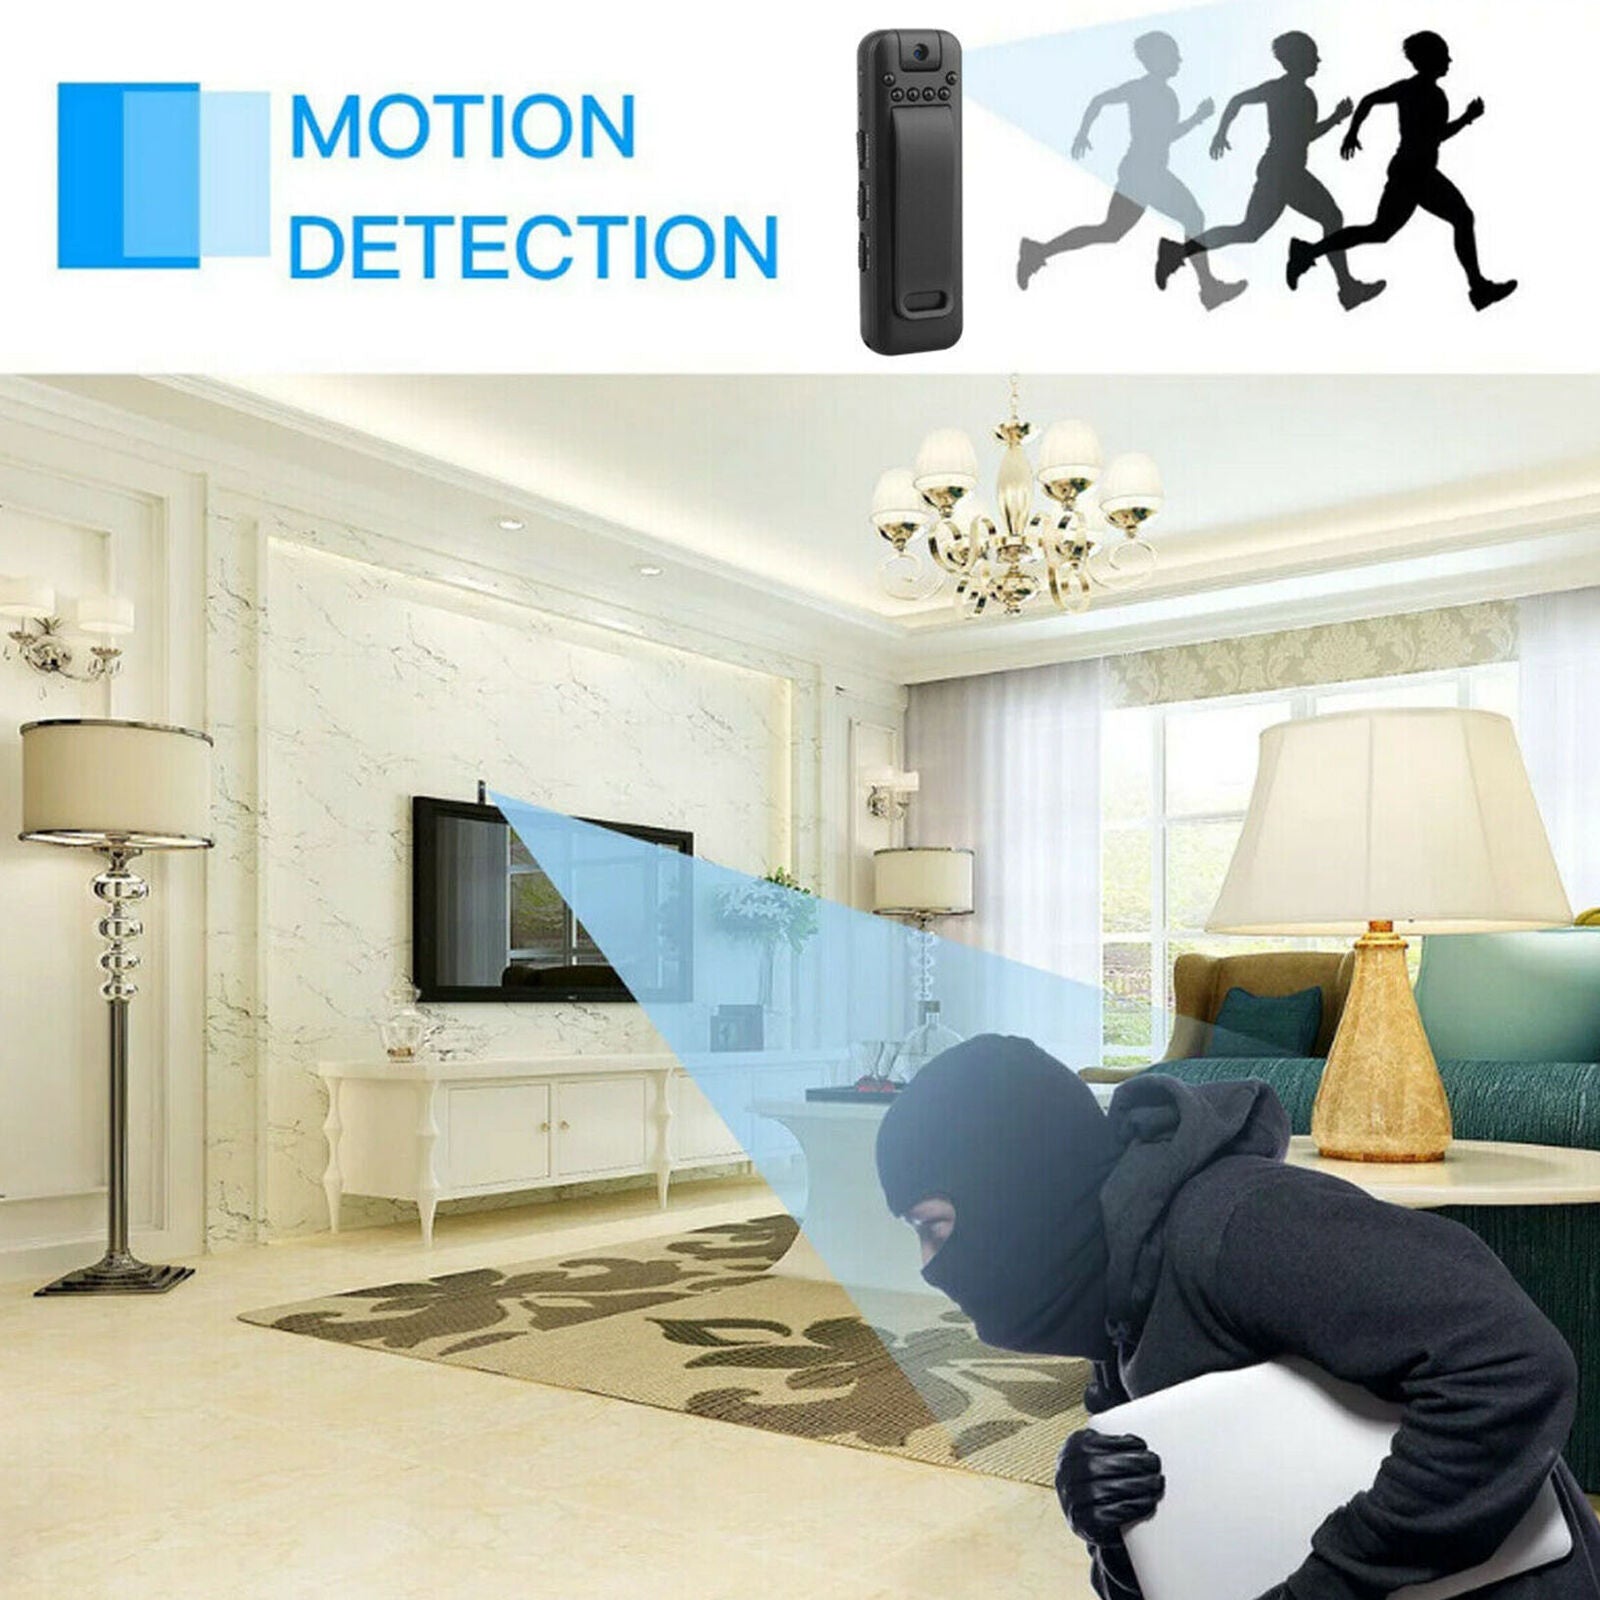 1080P HD Video DVR IR Night Cam 8-hour Motion Camcorder Mini Police Body Camera